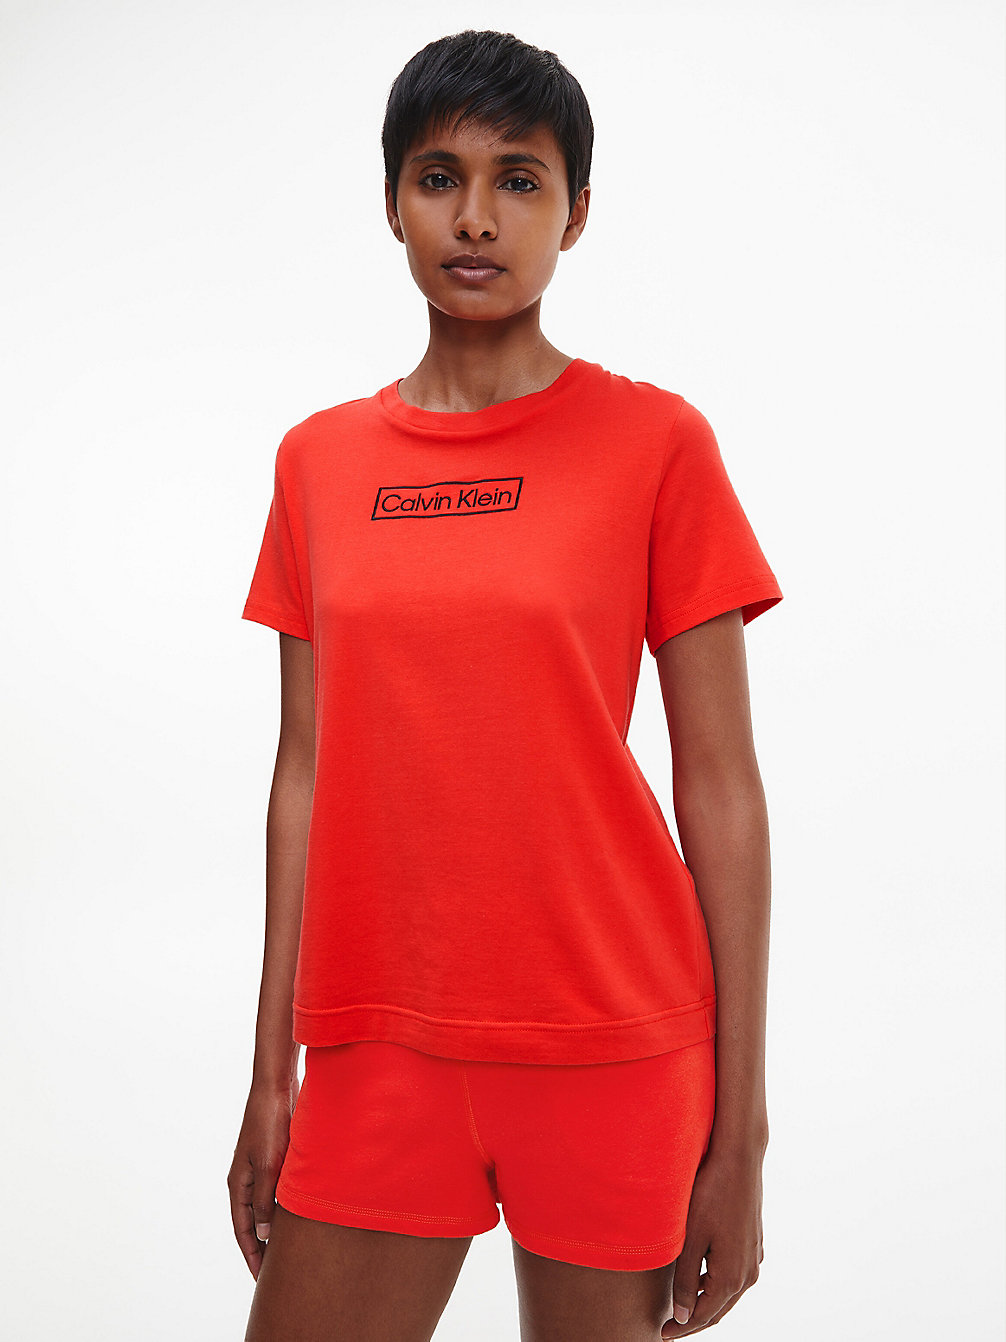 TUSCAN TERRA COTTA Lounge T-Shirt - Reimagined Heritage undefined women Calvin Klein